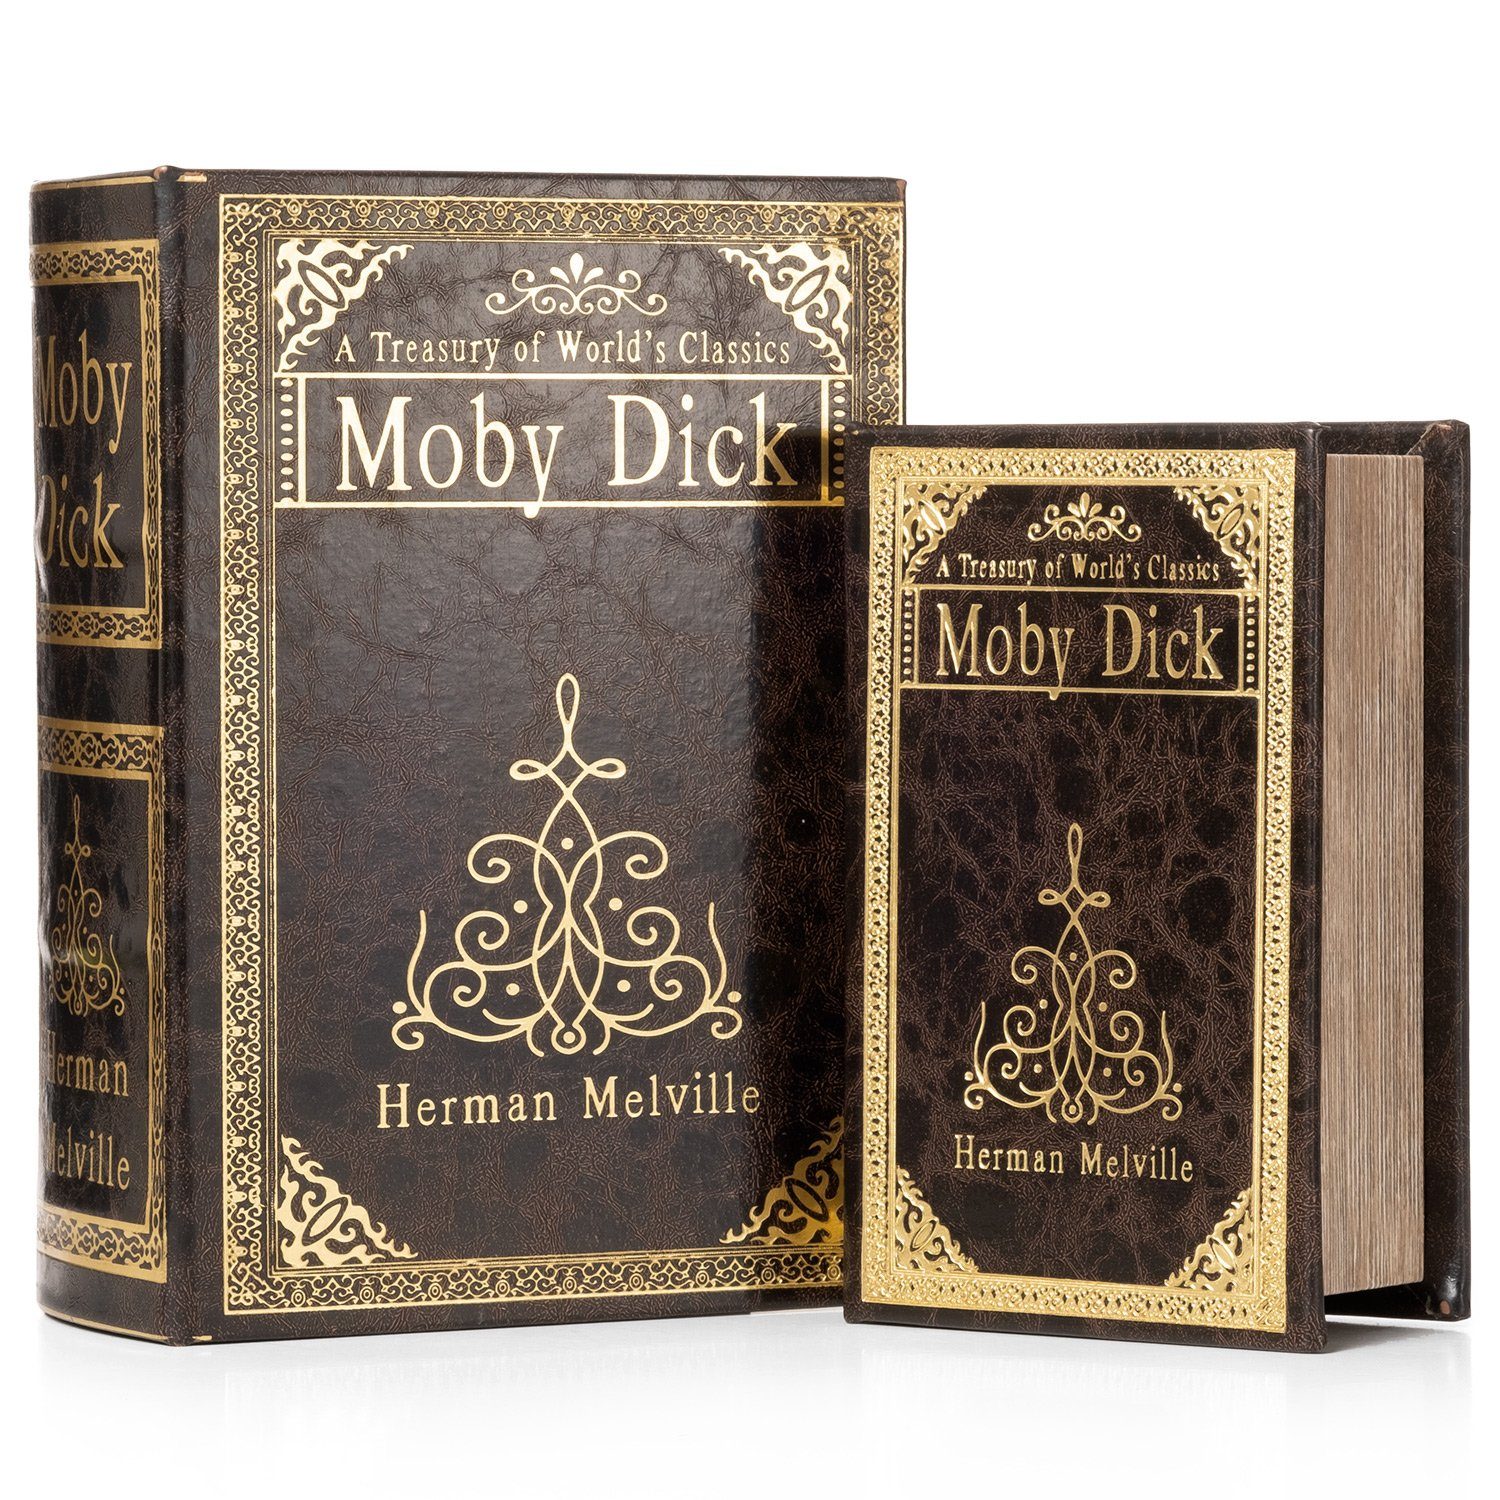 Moritz Etui Buchattrappe Moby Dick Wal verziert irrelevant, Buch Safe Box Schatulle Buchhülle Geldversteck Buchtresor